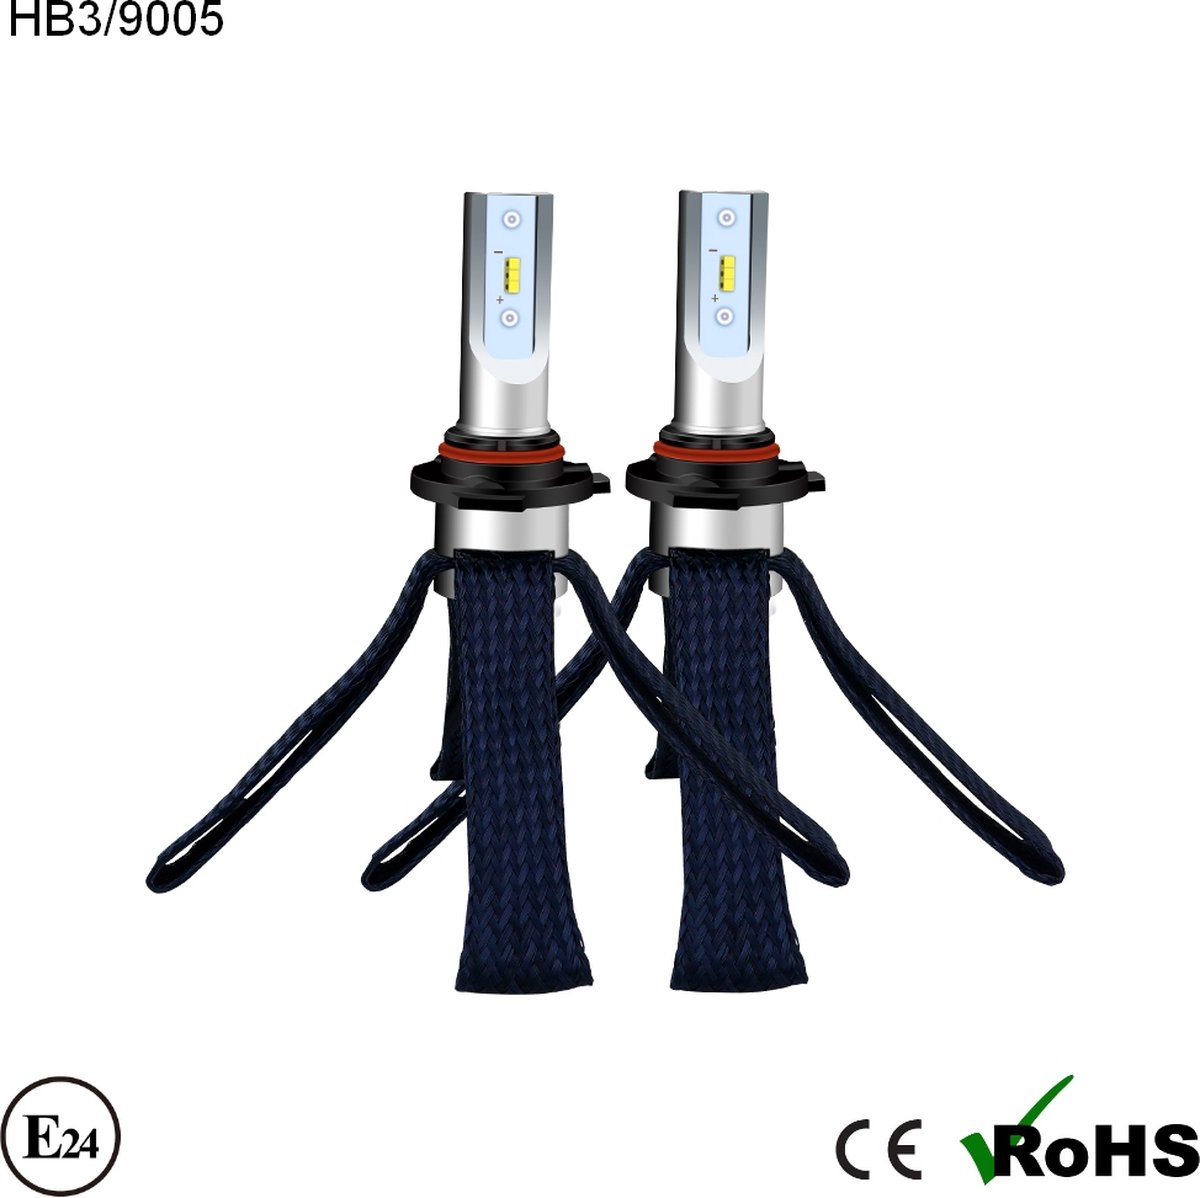 HB3/9005 Set Led G10J koplampen set 12.000 lumen flex E-keur